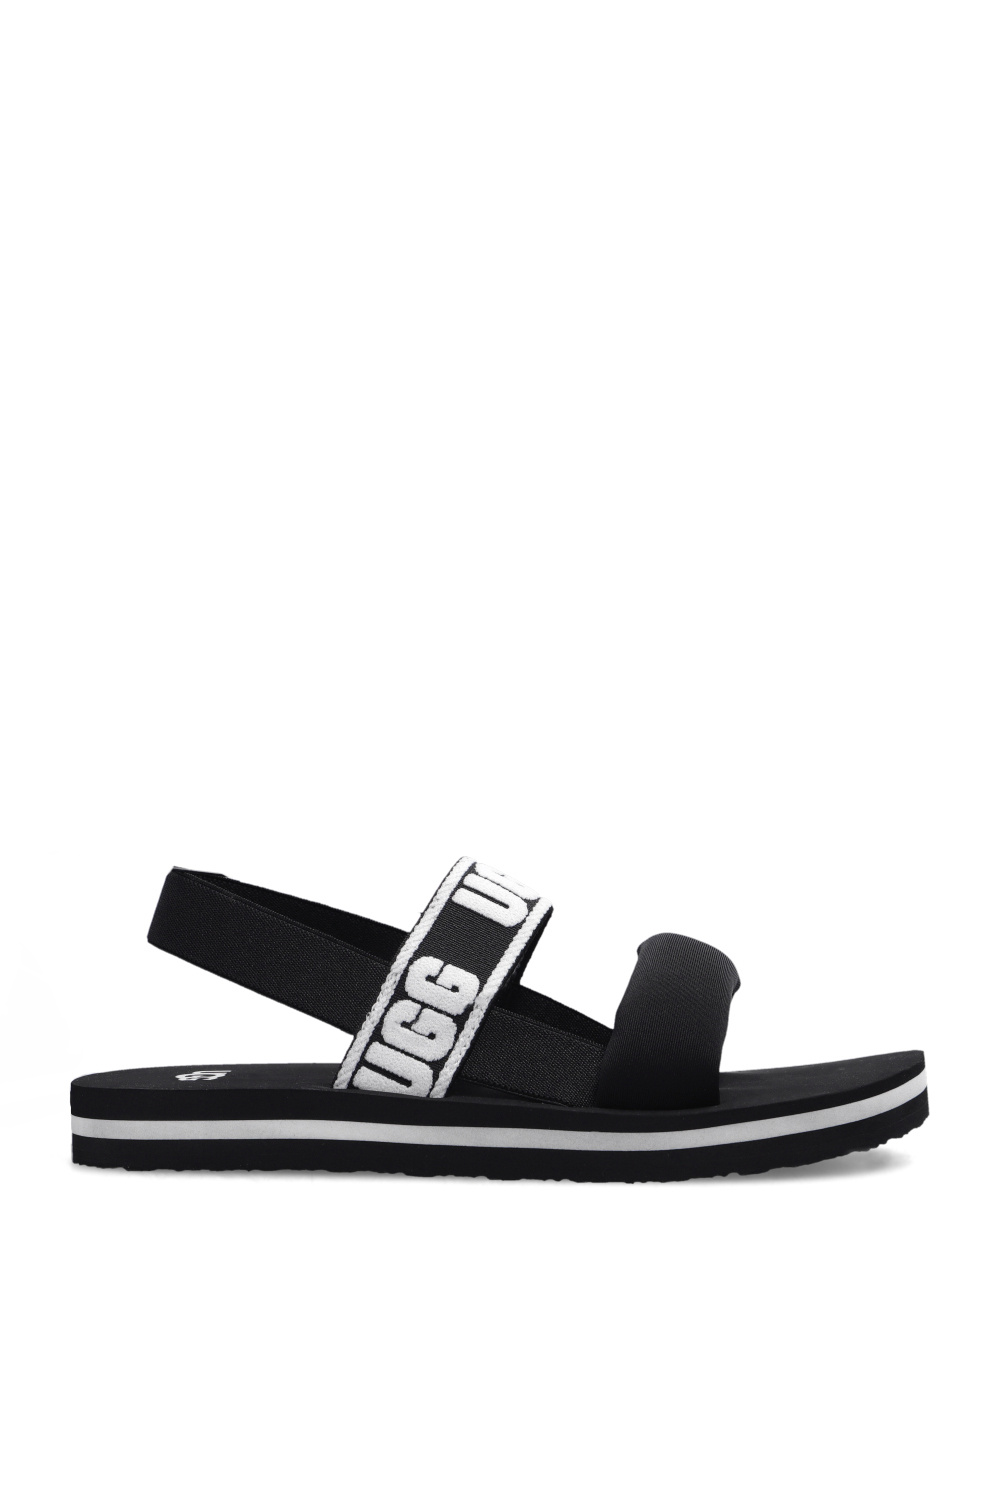 ugg popularity Kids ‘Zuma Sling’ sandals